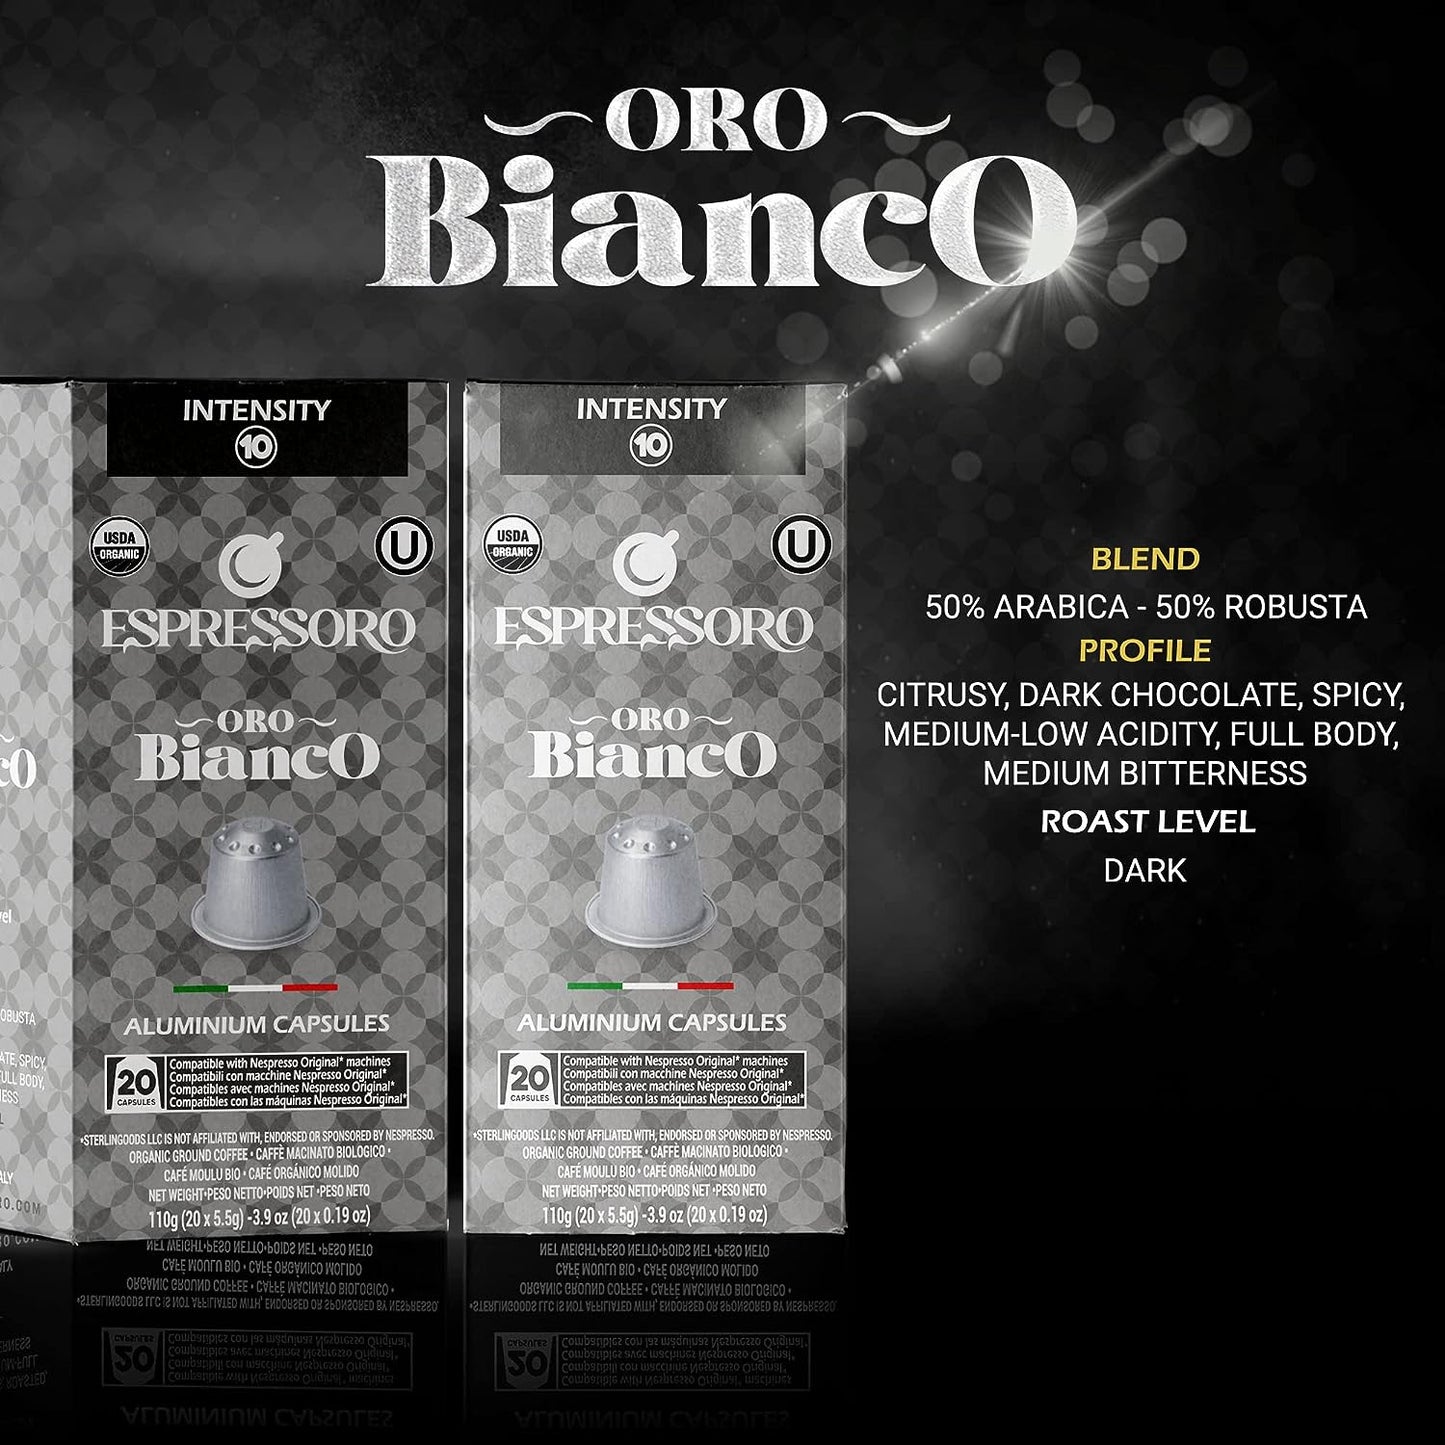 ESPRESSORO Organic Aluminum Nespresso Compatible Capsules -100 Count ORO BIANCO blend- Capsules compatible with Nespresso Original line machines Organic Italian Coffee